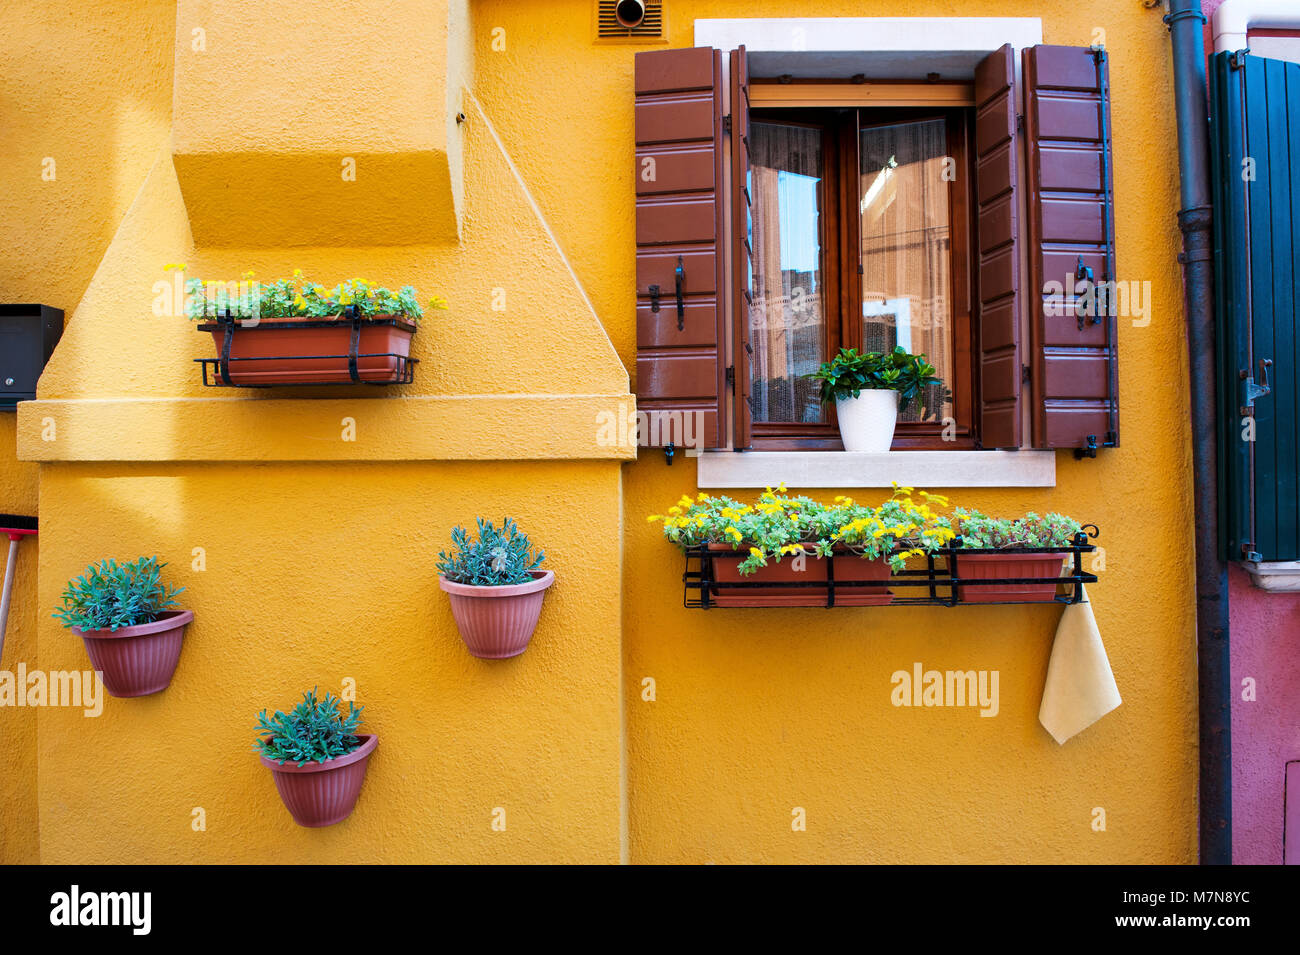 Venice, Burano island, Italy, Europe - yellow home facade with window and plants Stock Photo